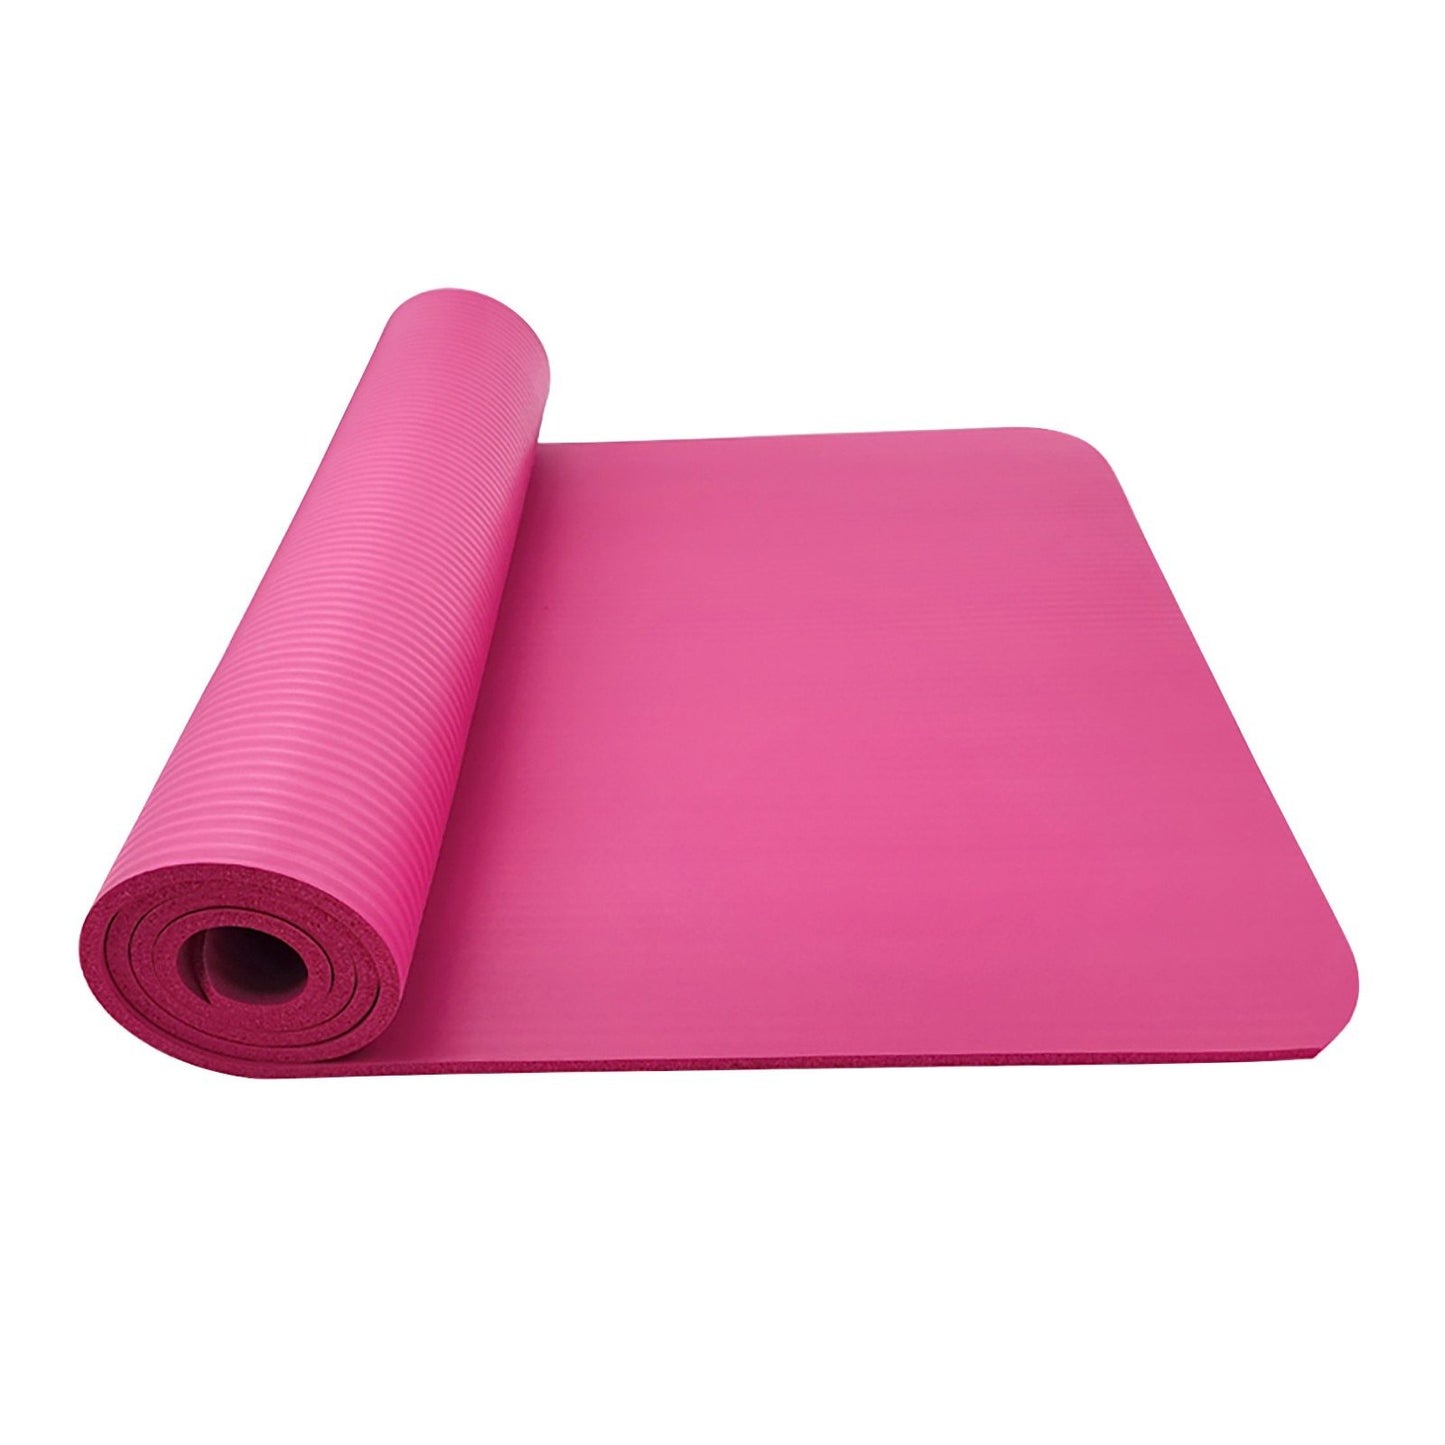 Large Size Slip Yoga Fitness Mat